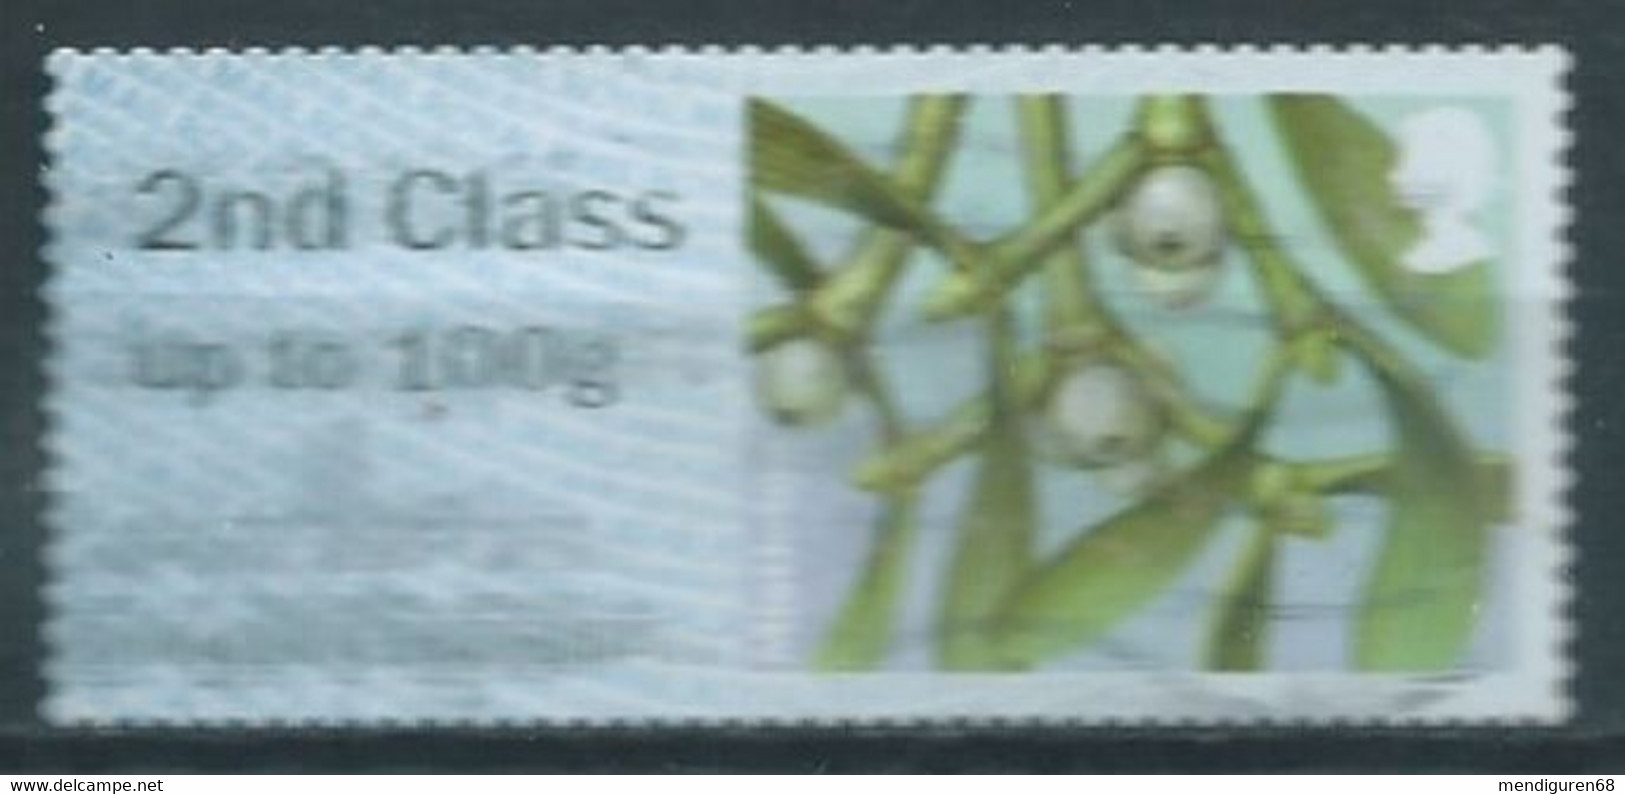 GROSBRITANNIEN GRANDE BRETAGNE GB 2014 POST&GO WINTERFLOWERS: BUTCHER'S BROOM  2ND CLASS Up To 100g SG FS111 - Post & Go Stamps